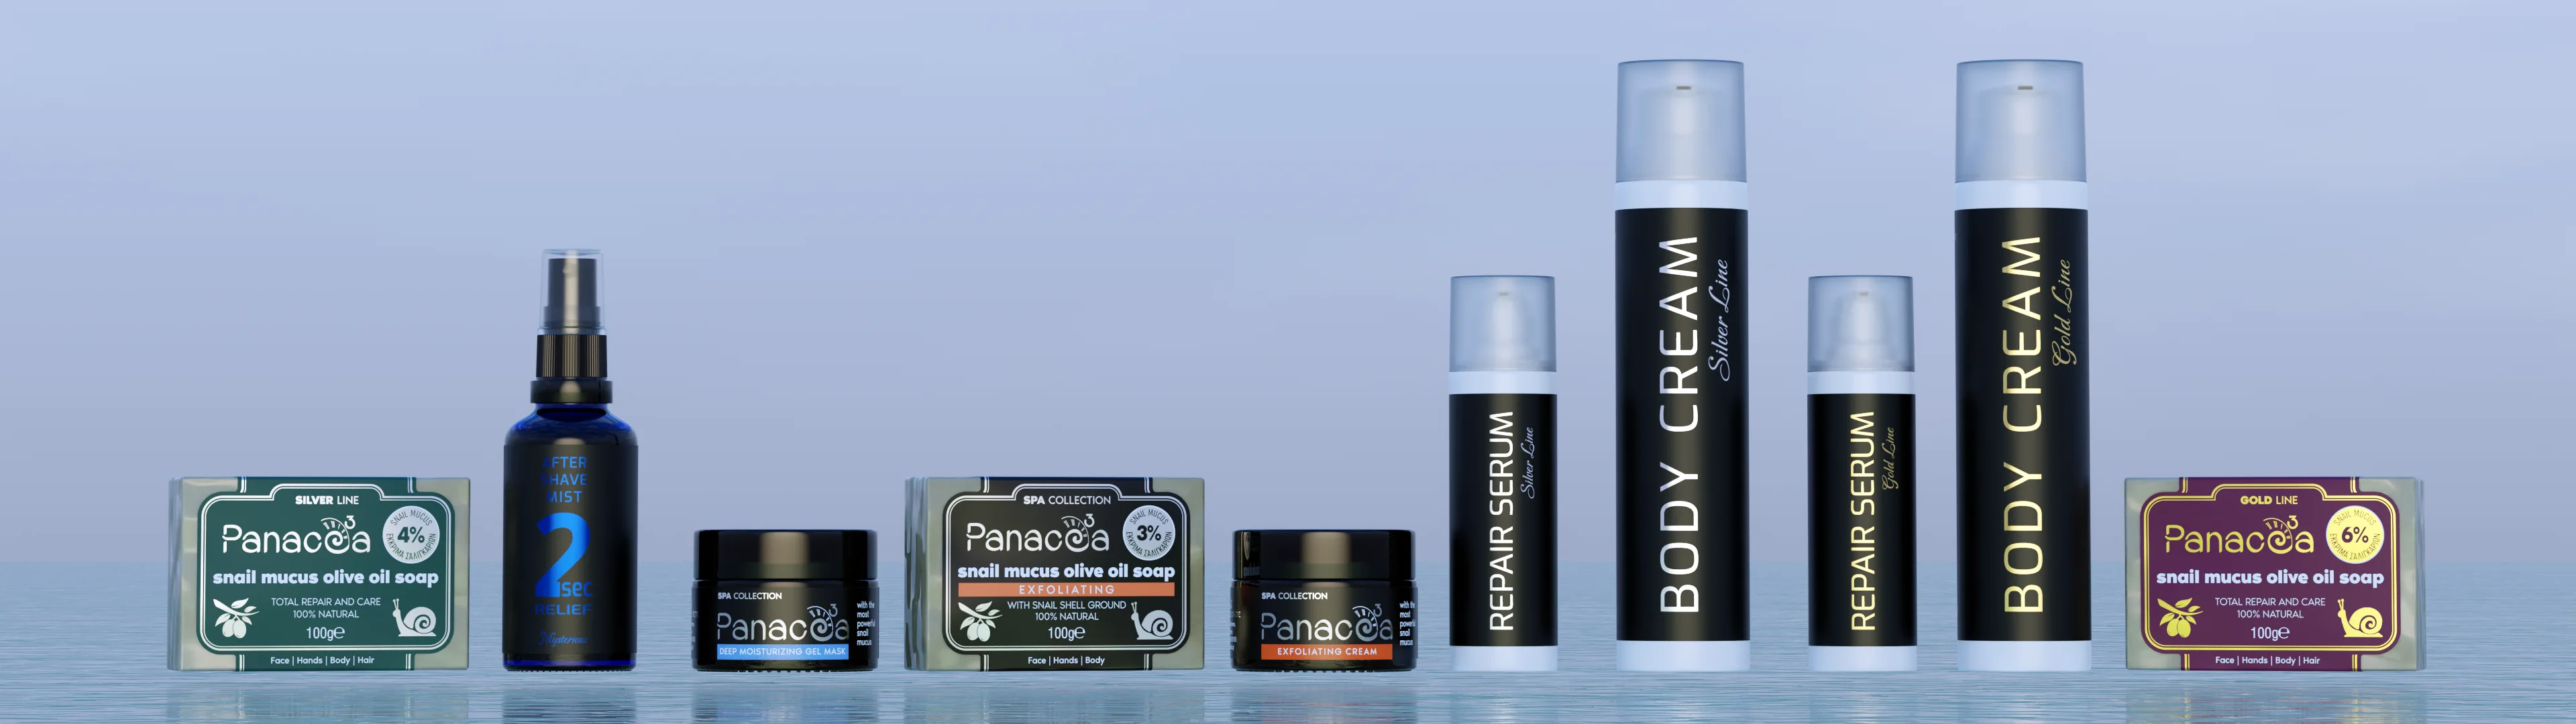 PANACEA3 Silver Line cosmetics from snail secretion